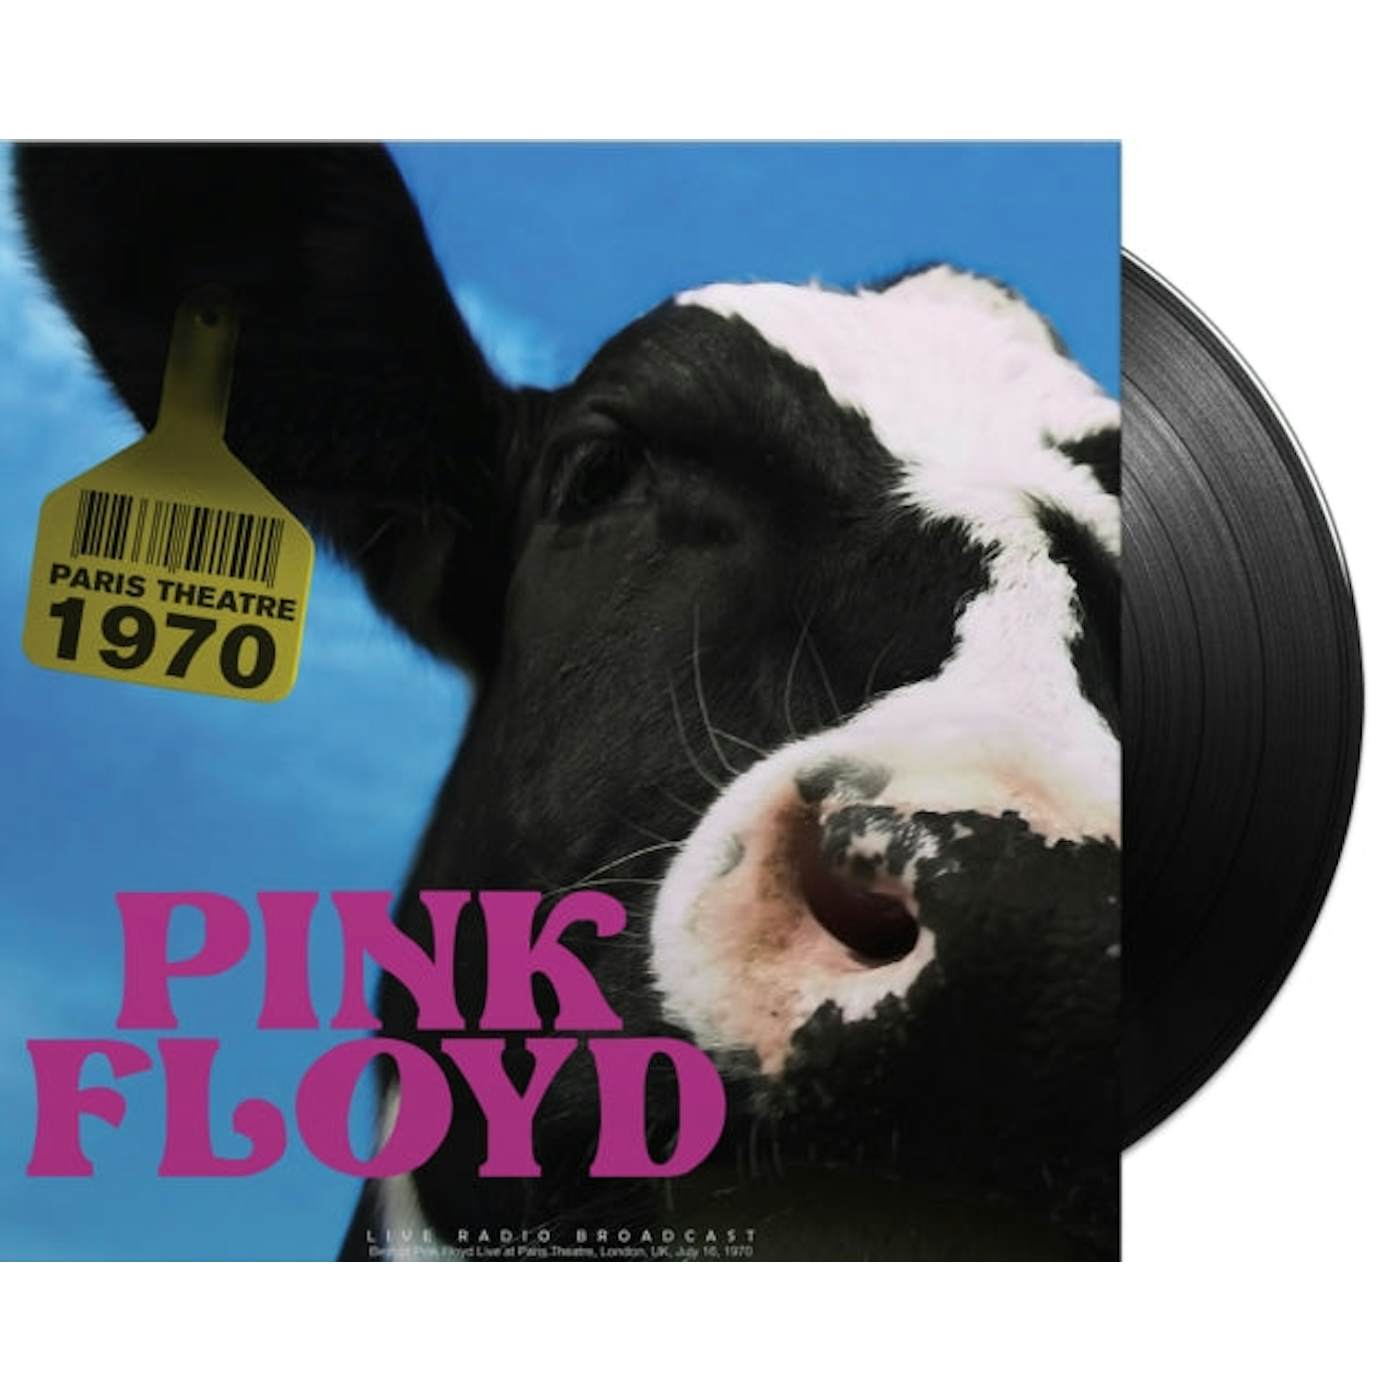 Pink Floyd LP - Paris Theatre 1970 (Vinyl)